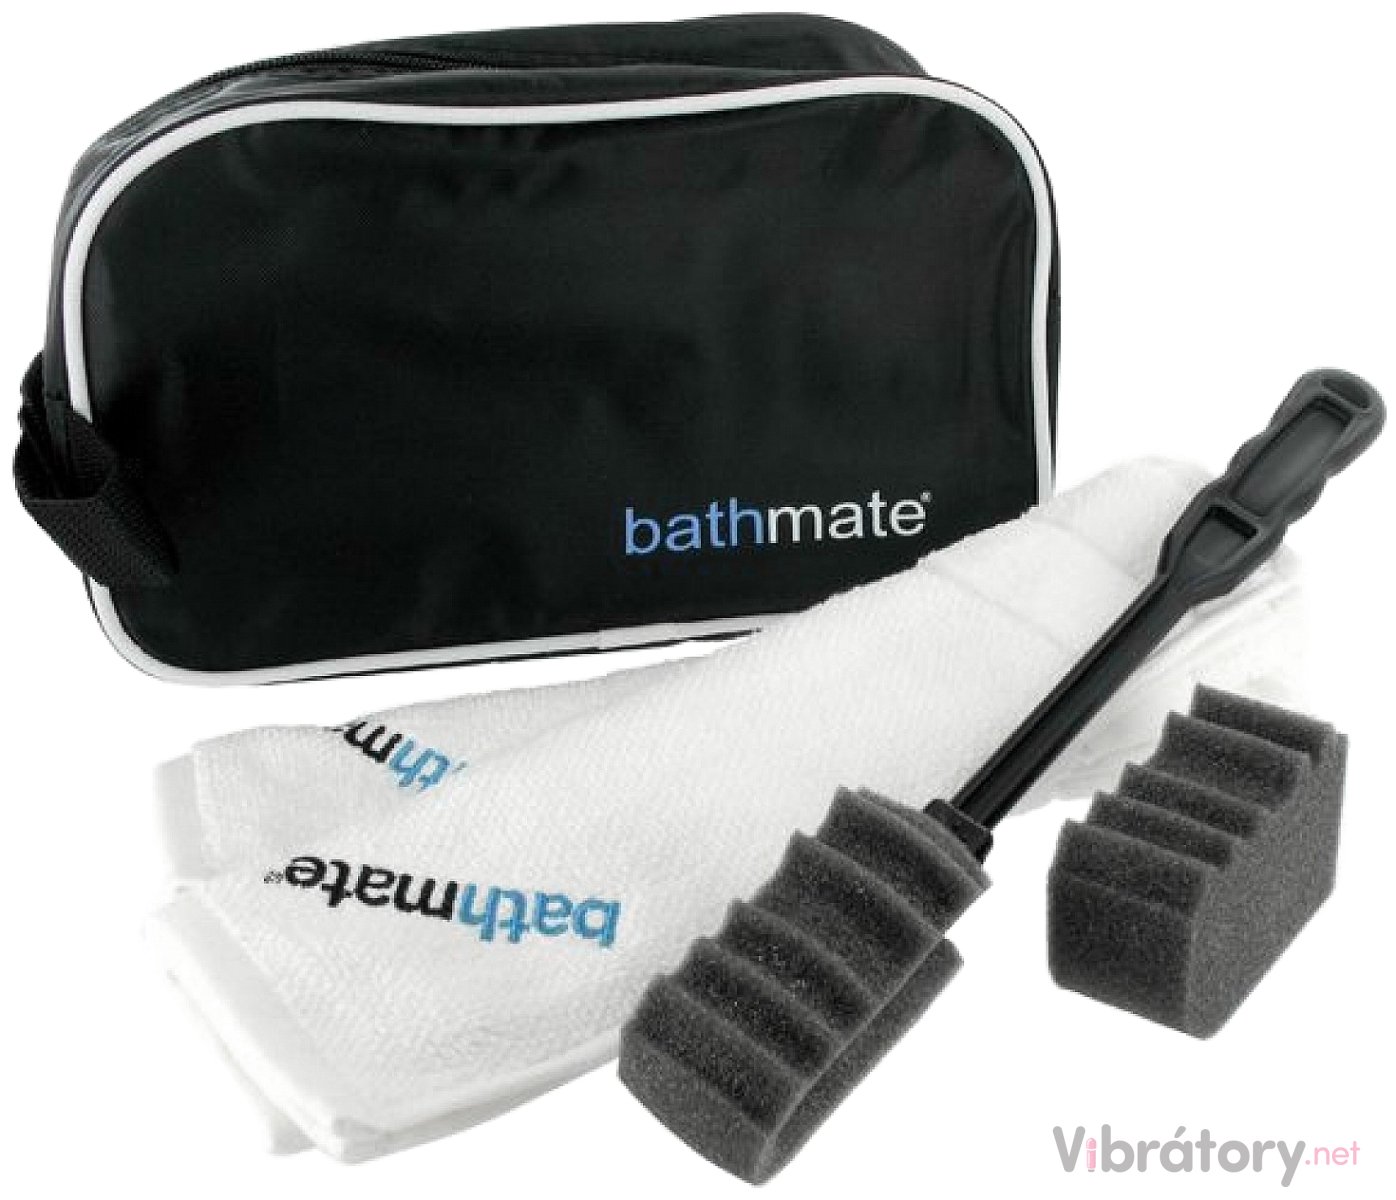 Kosmetická taška a sada na čištění vakuových pump Bathmate